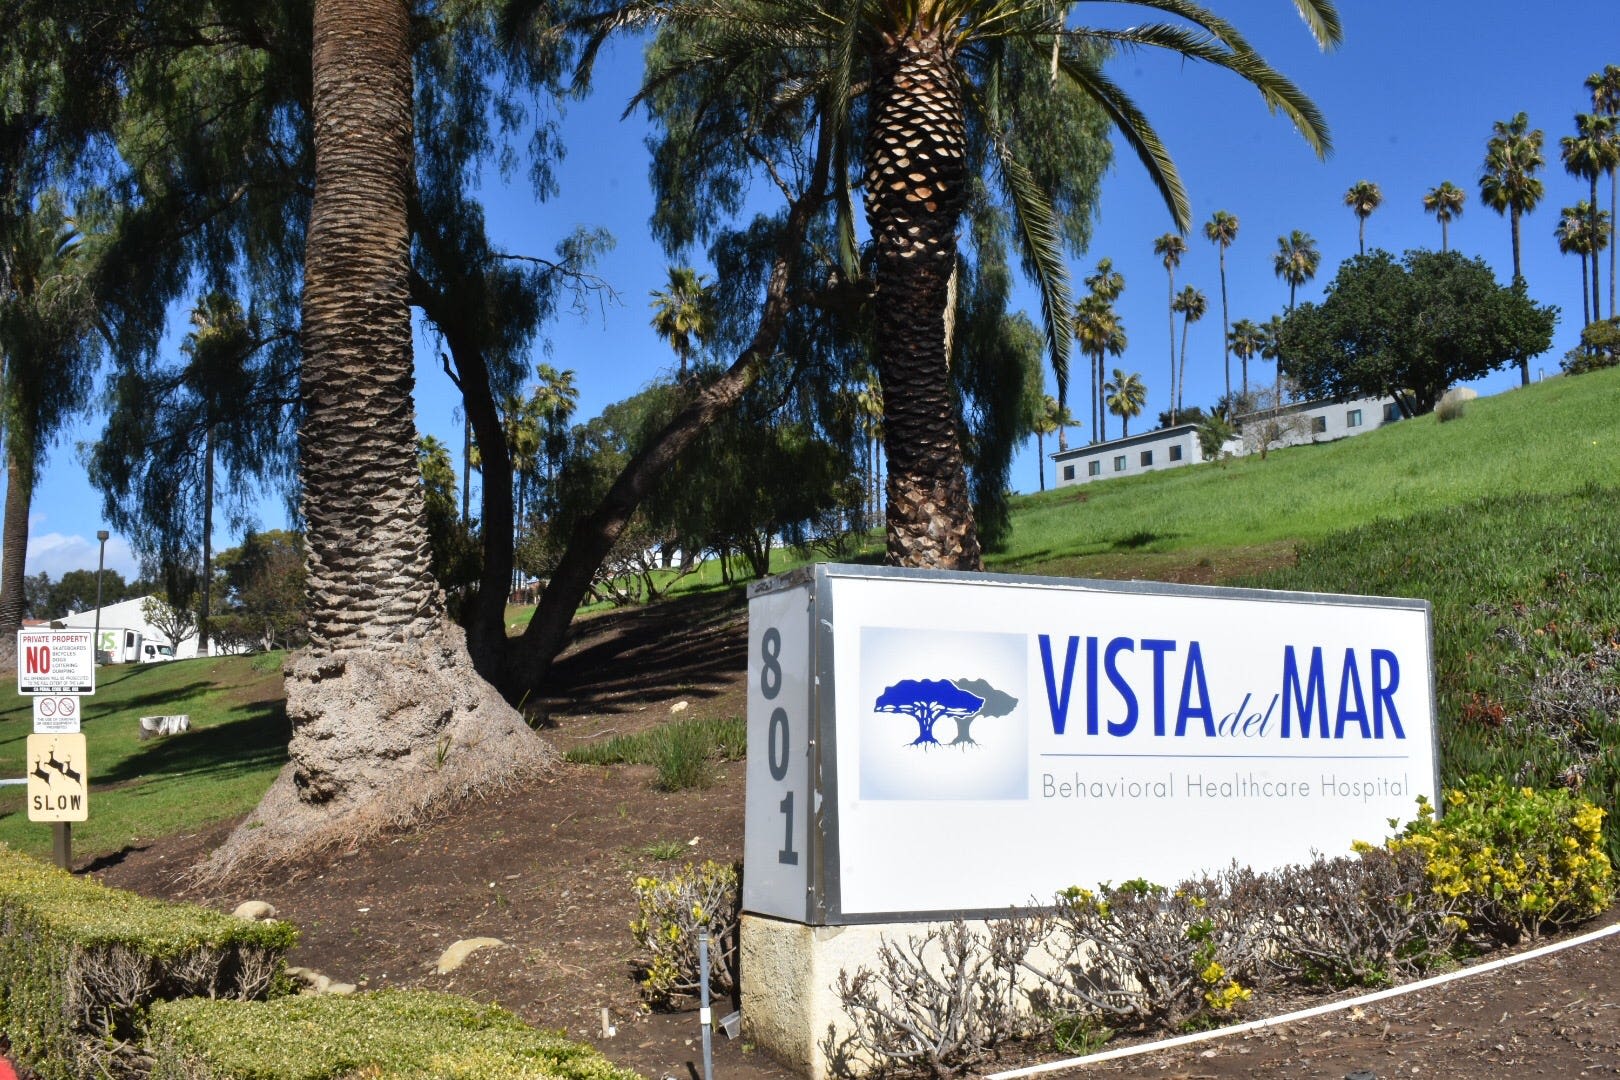 Vista del Mar psychiatric hospital may soon get privileges restored after suspension